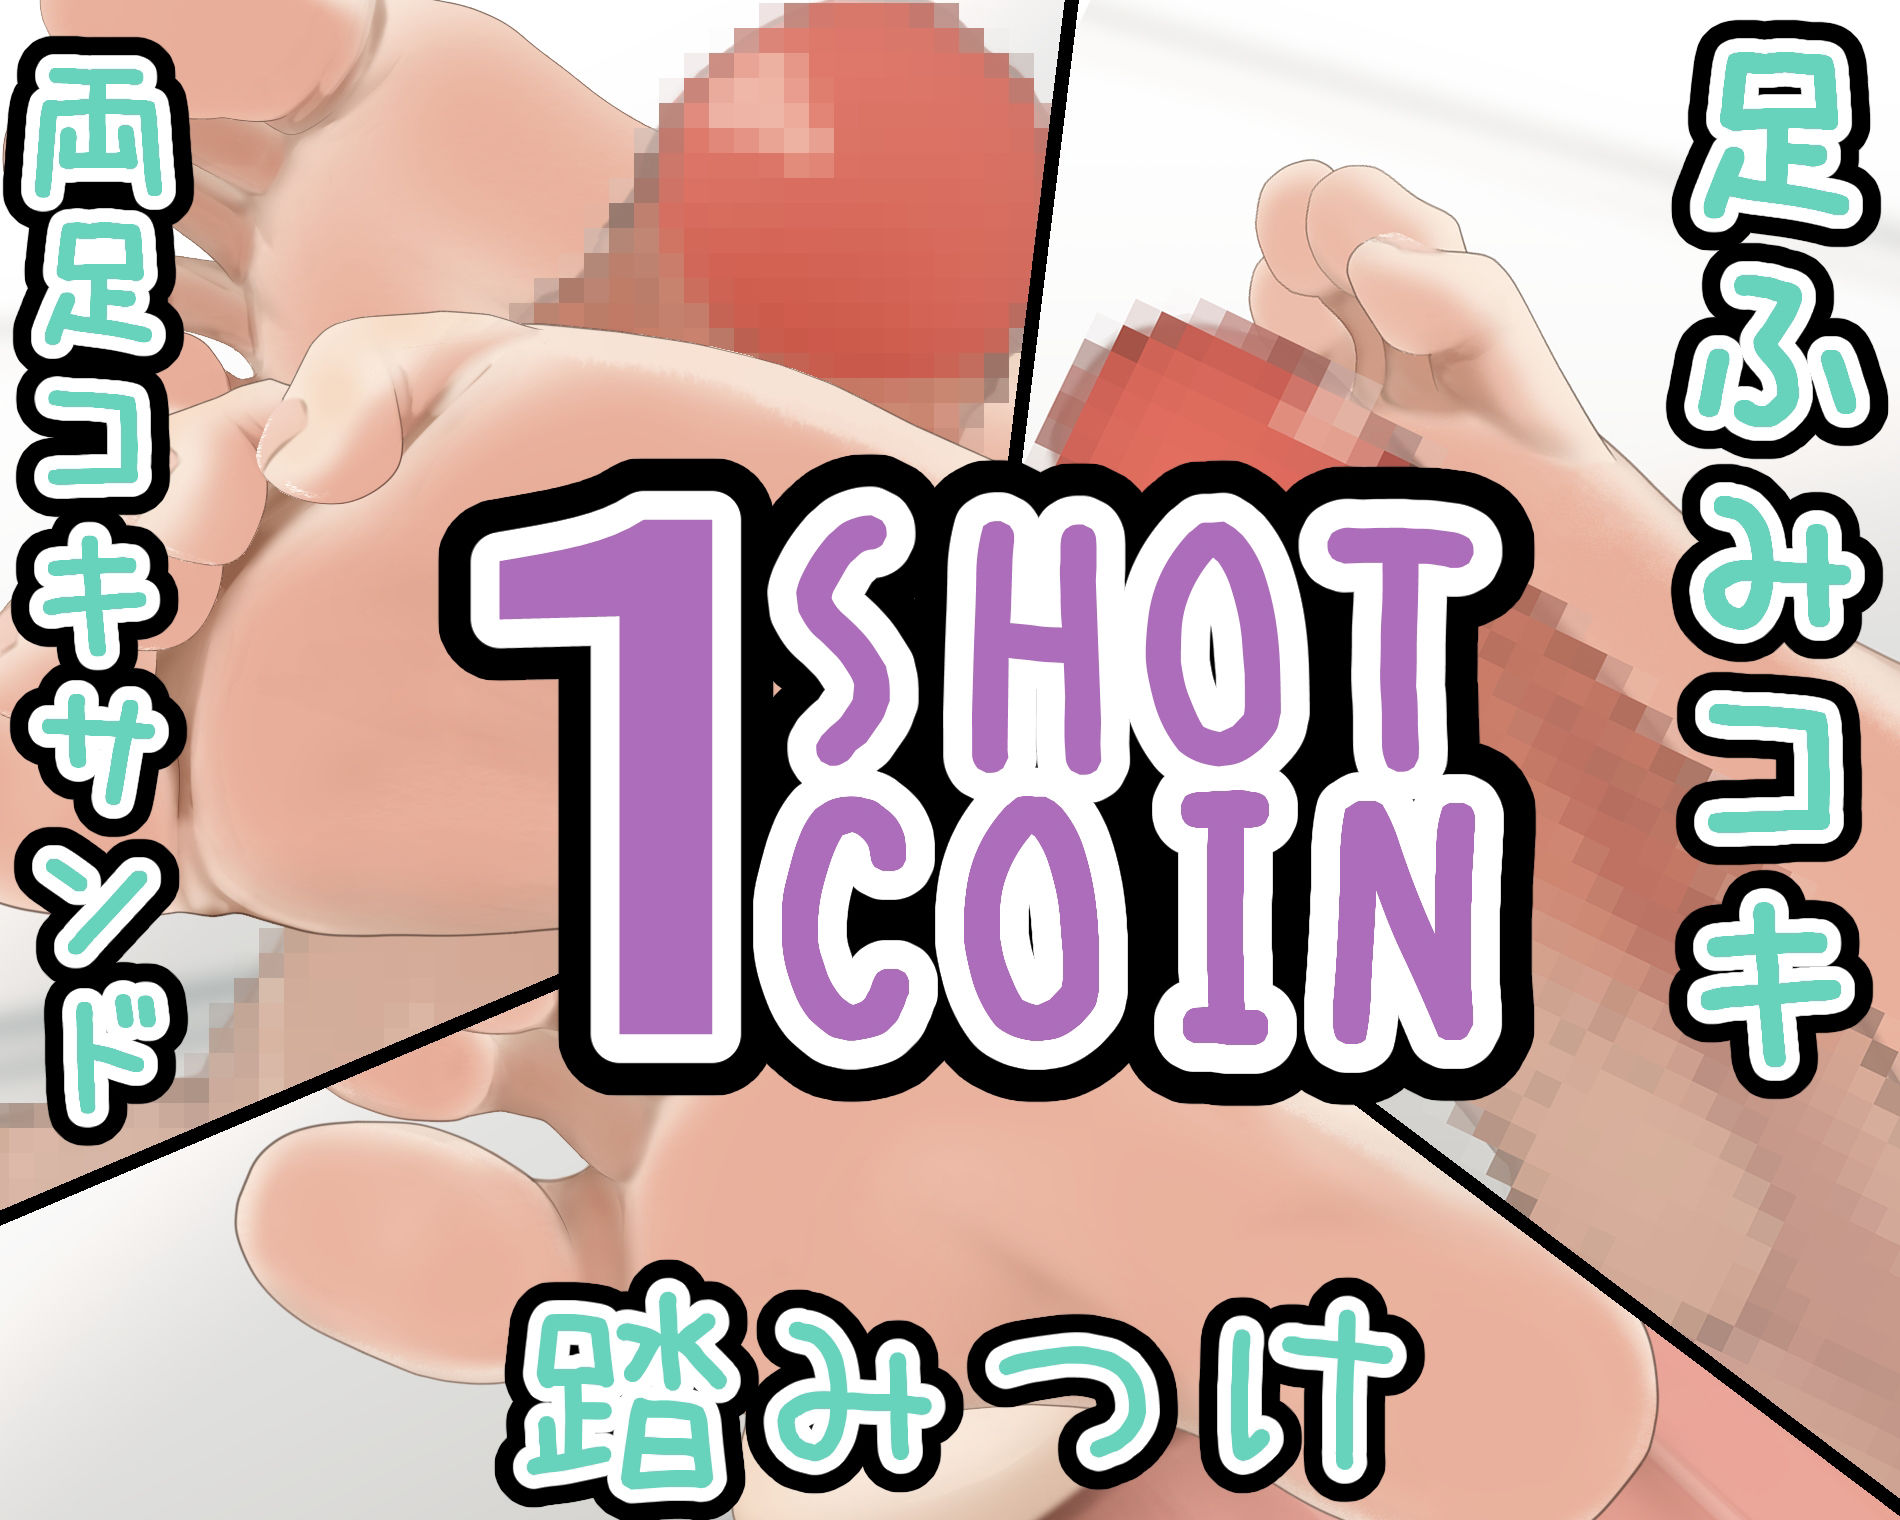 1SHOT 1COIN〜Vol.5〜足フェチの裸足フェチによる足フェチ向けの動画_2